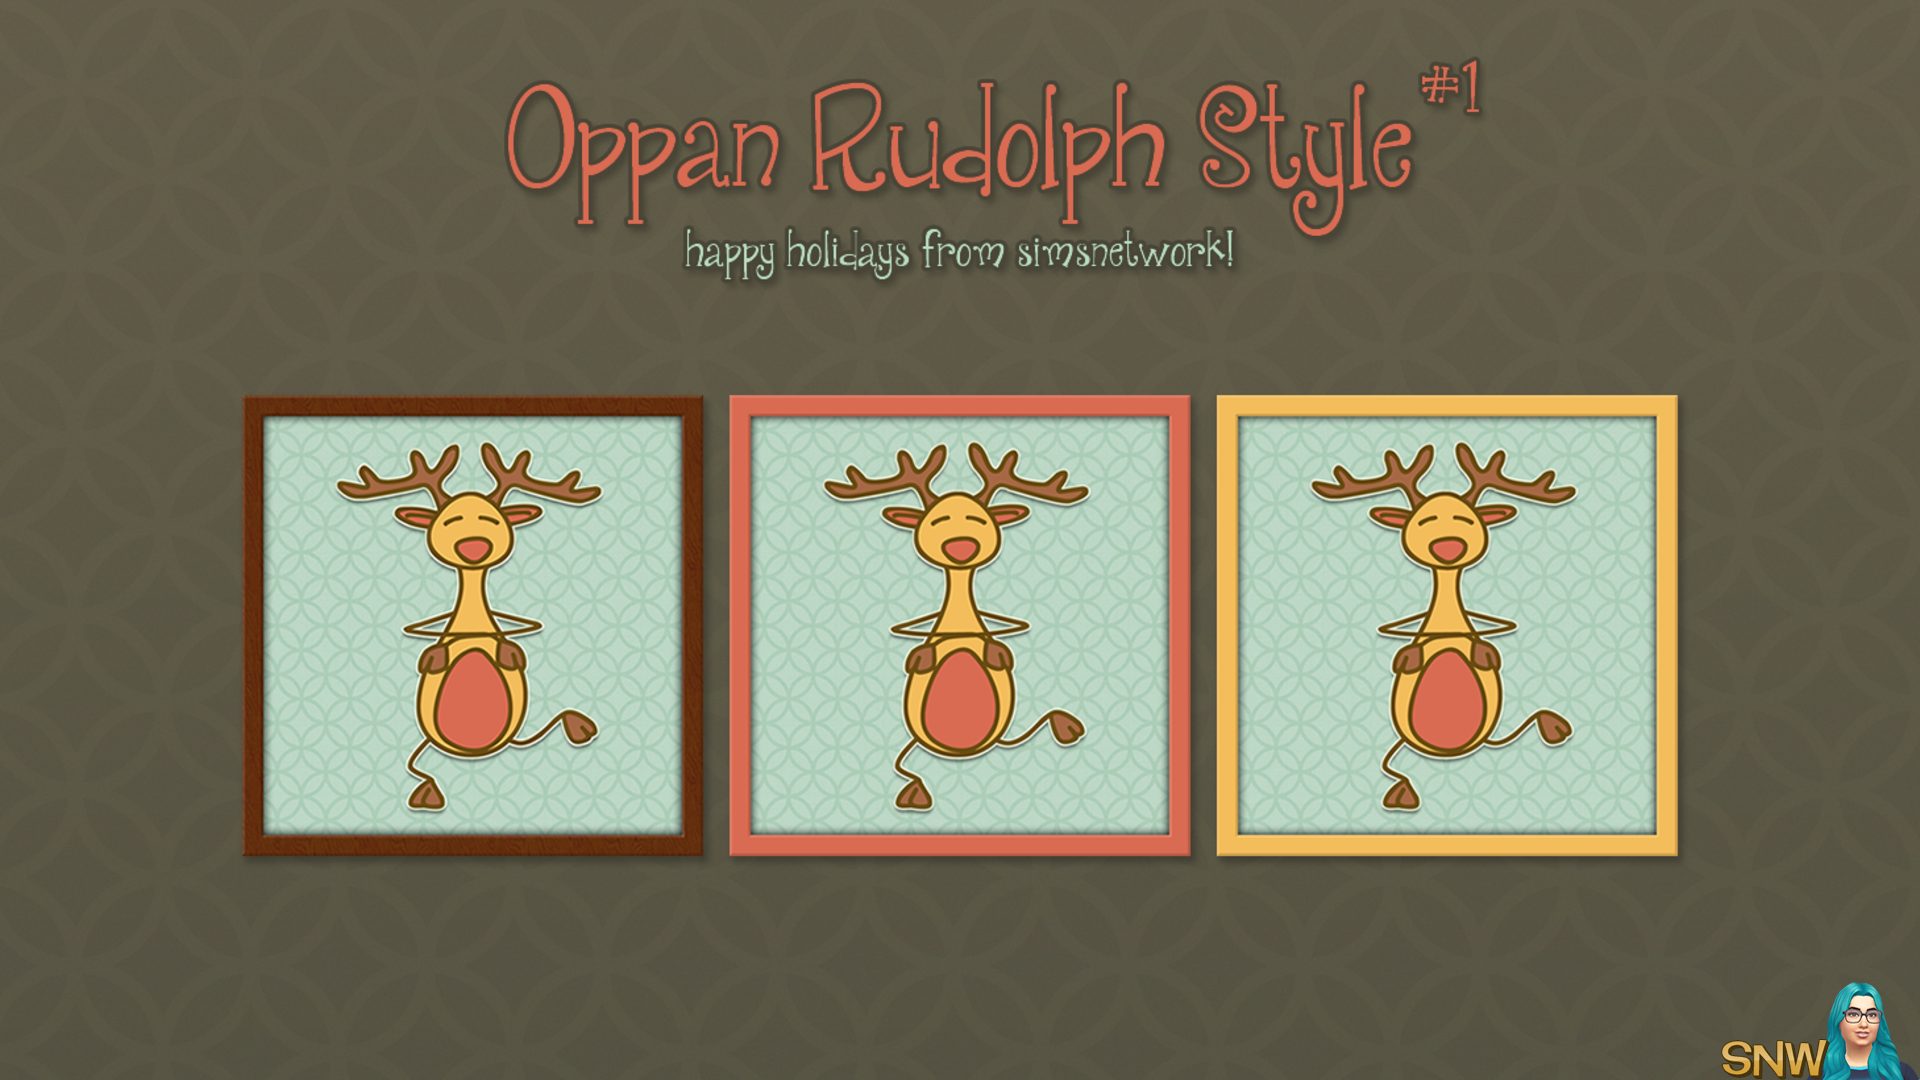 Oppan Rudolph Style #1